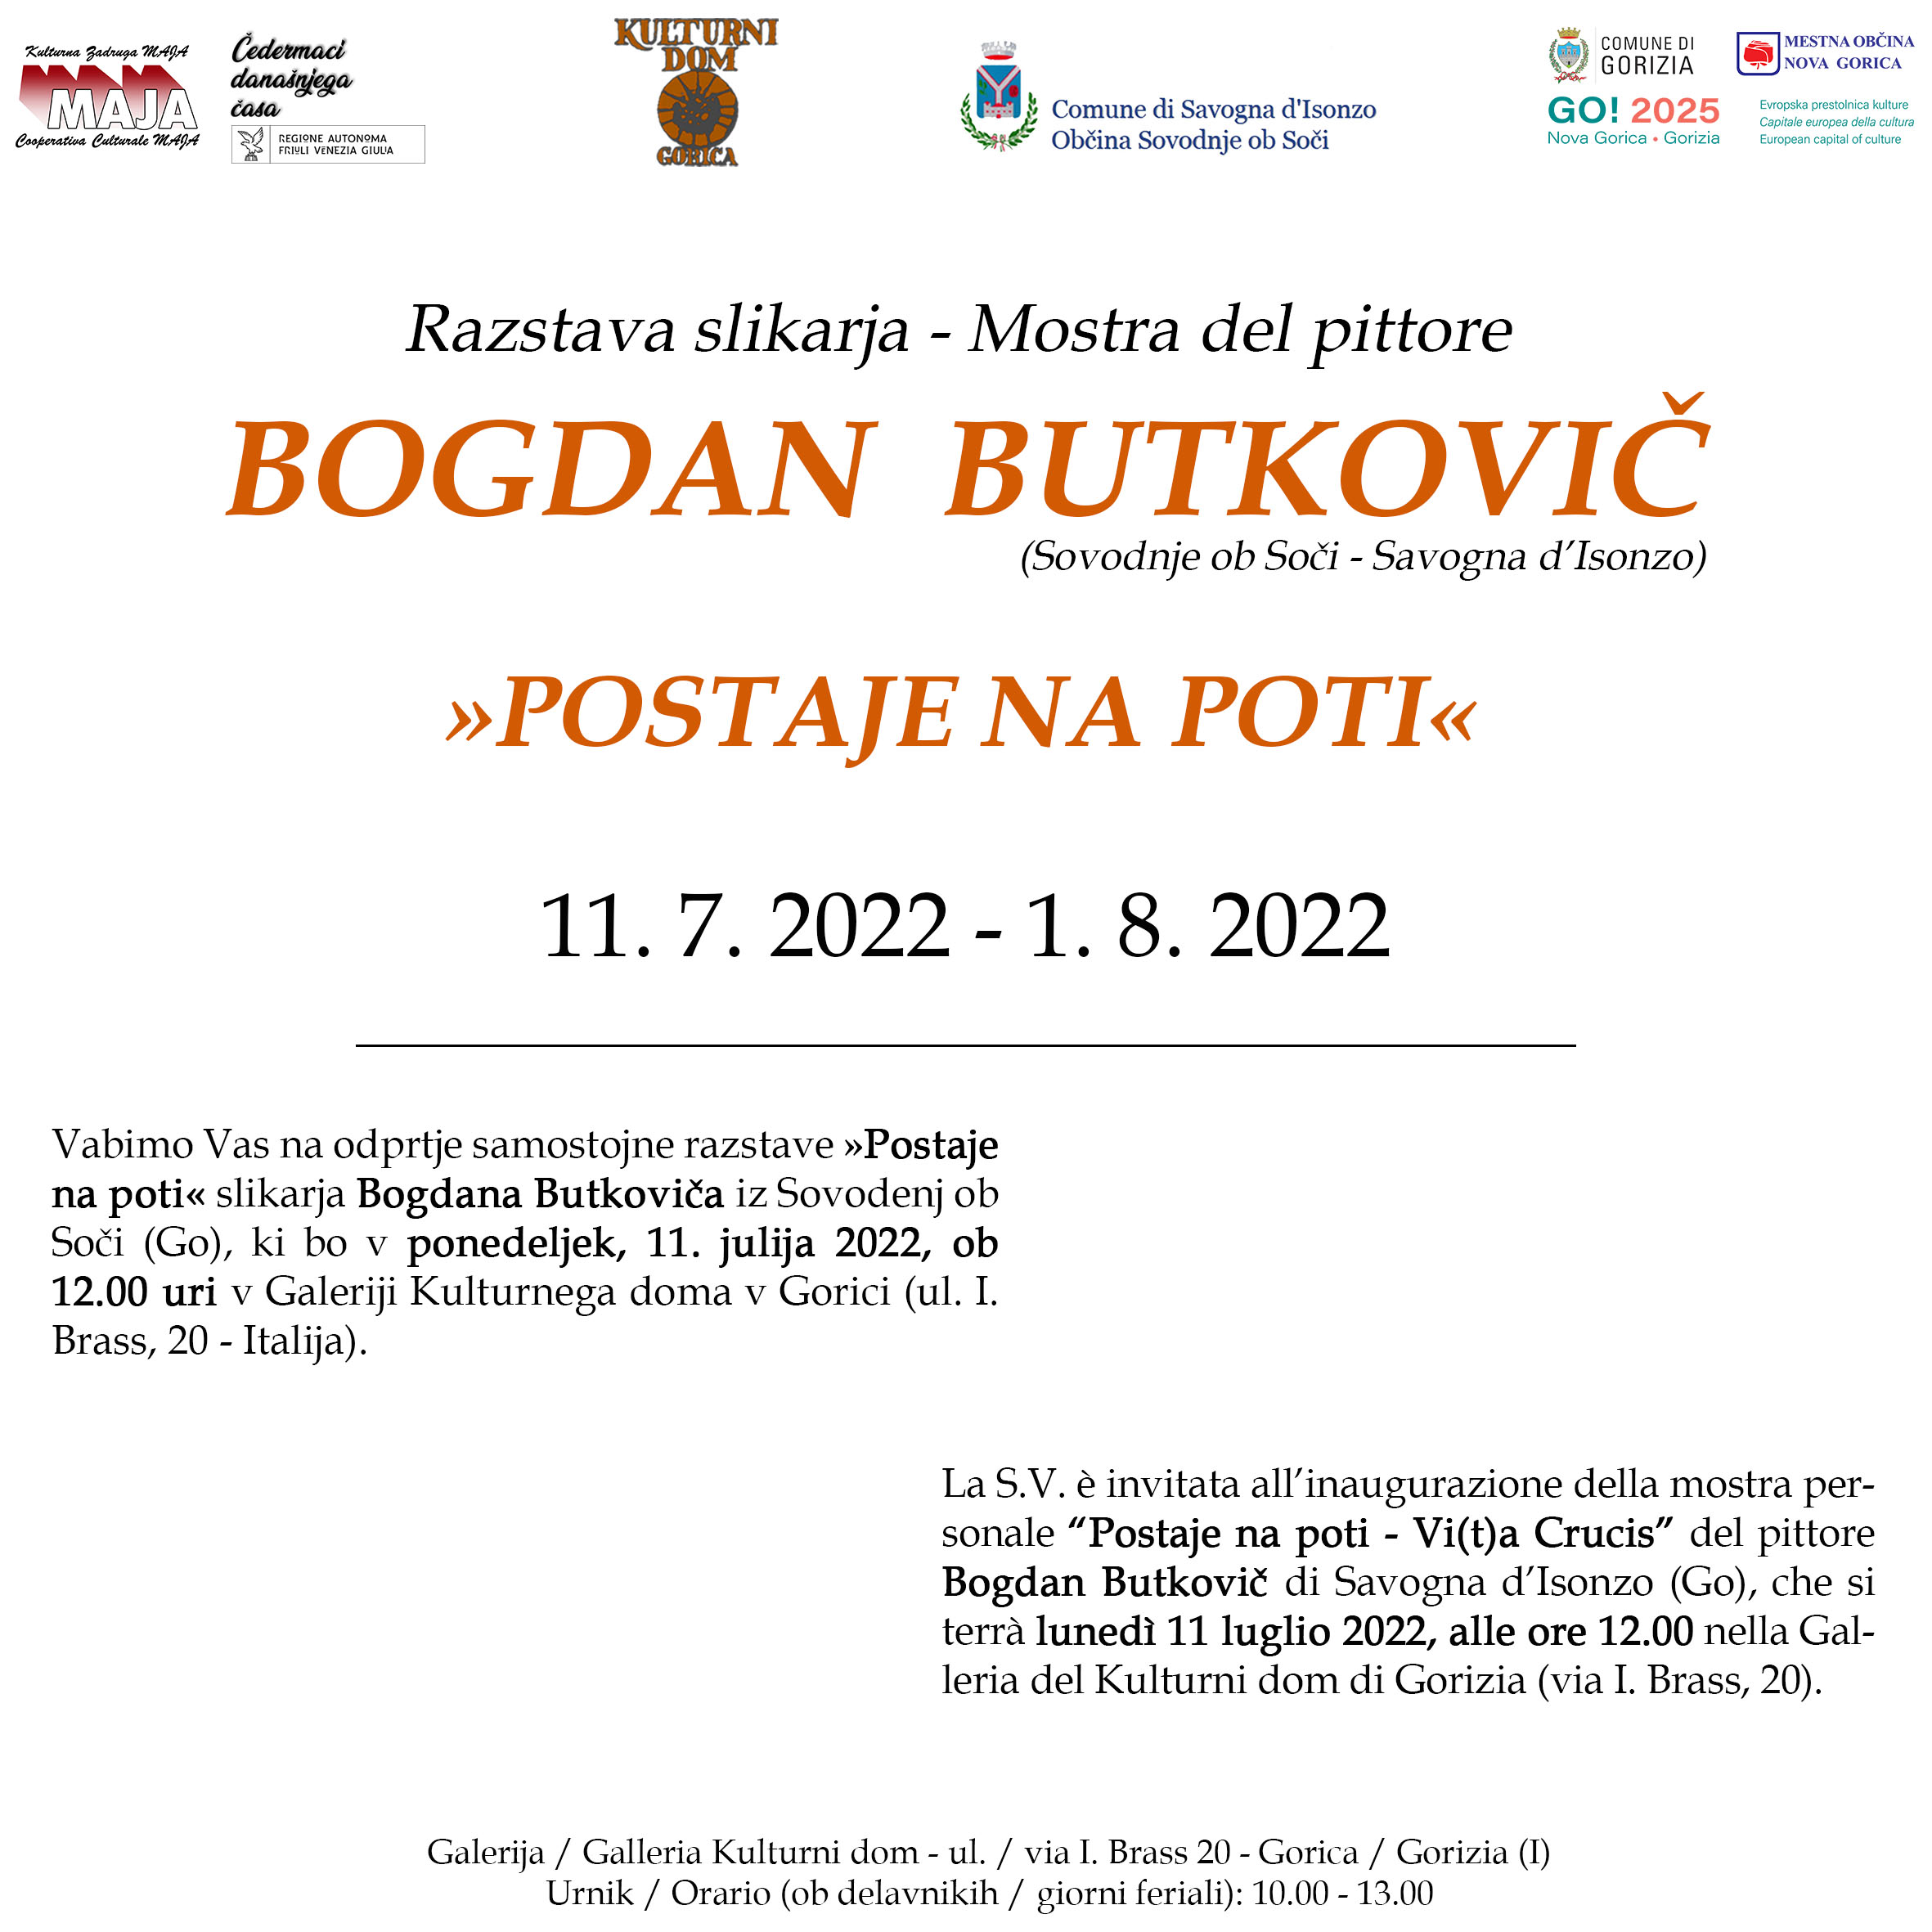 Bogdan Butkovič - “Postaje na poti – Vi(t)a Crucis”